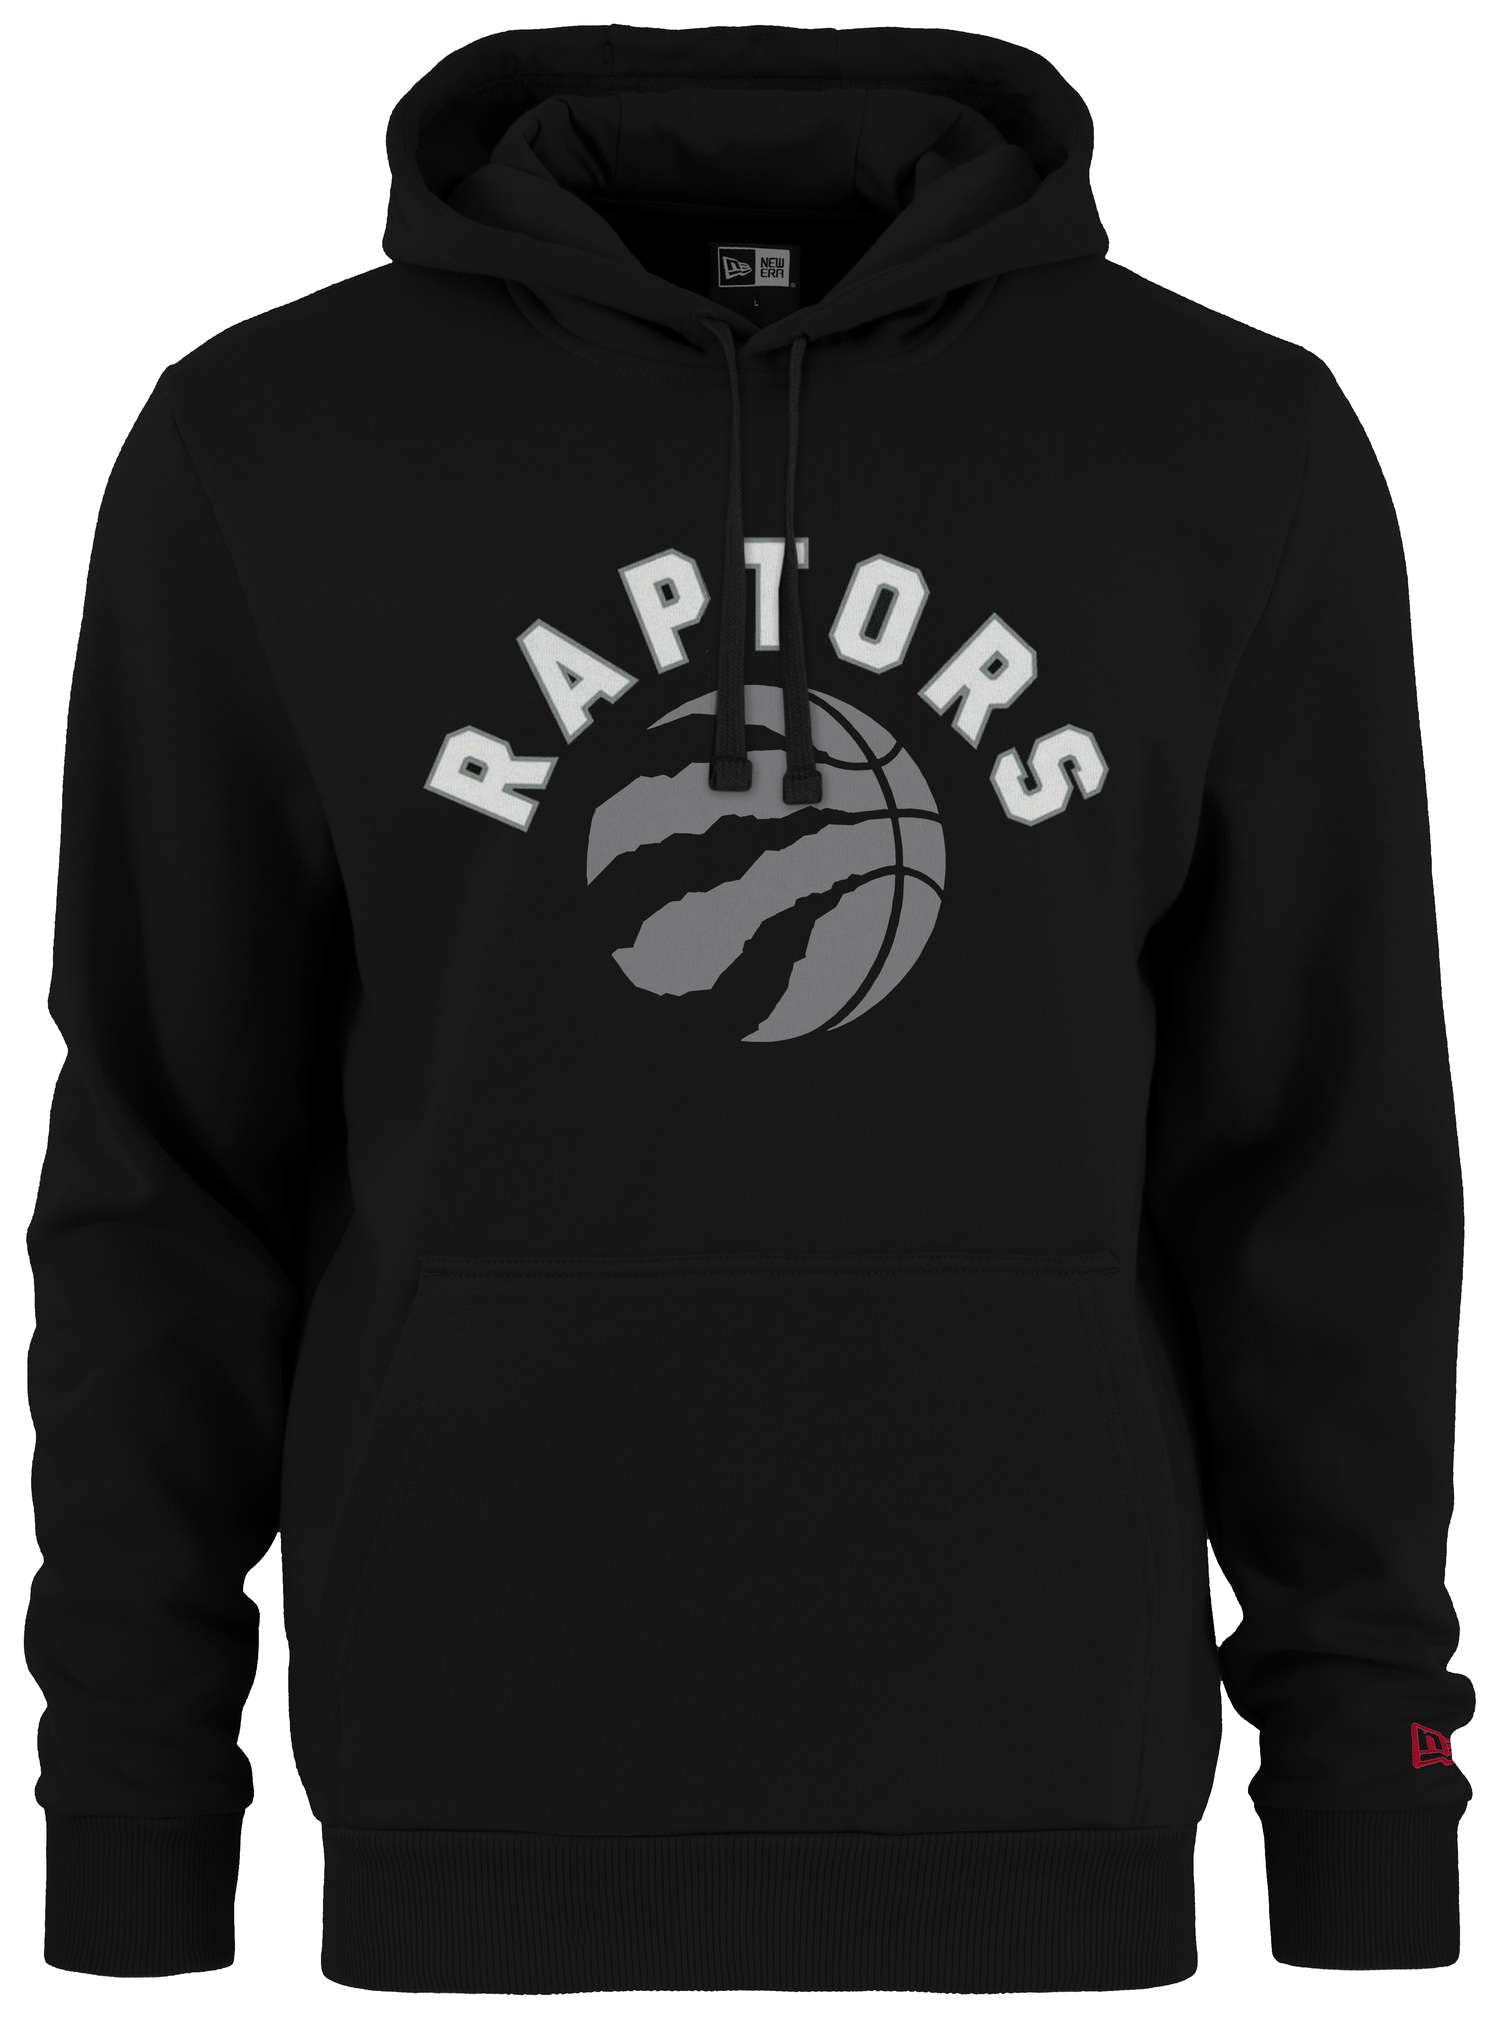 New Era - NBA Toronto Raptors Team Logo Hoodie - Schwarz